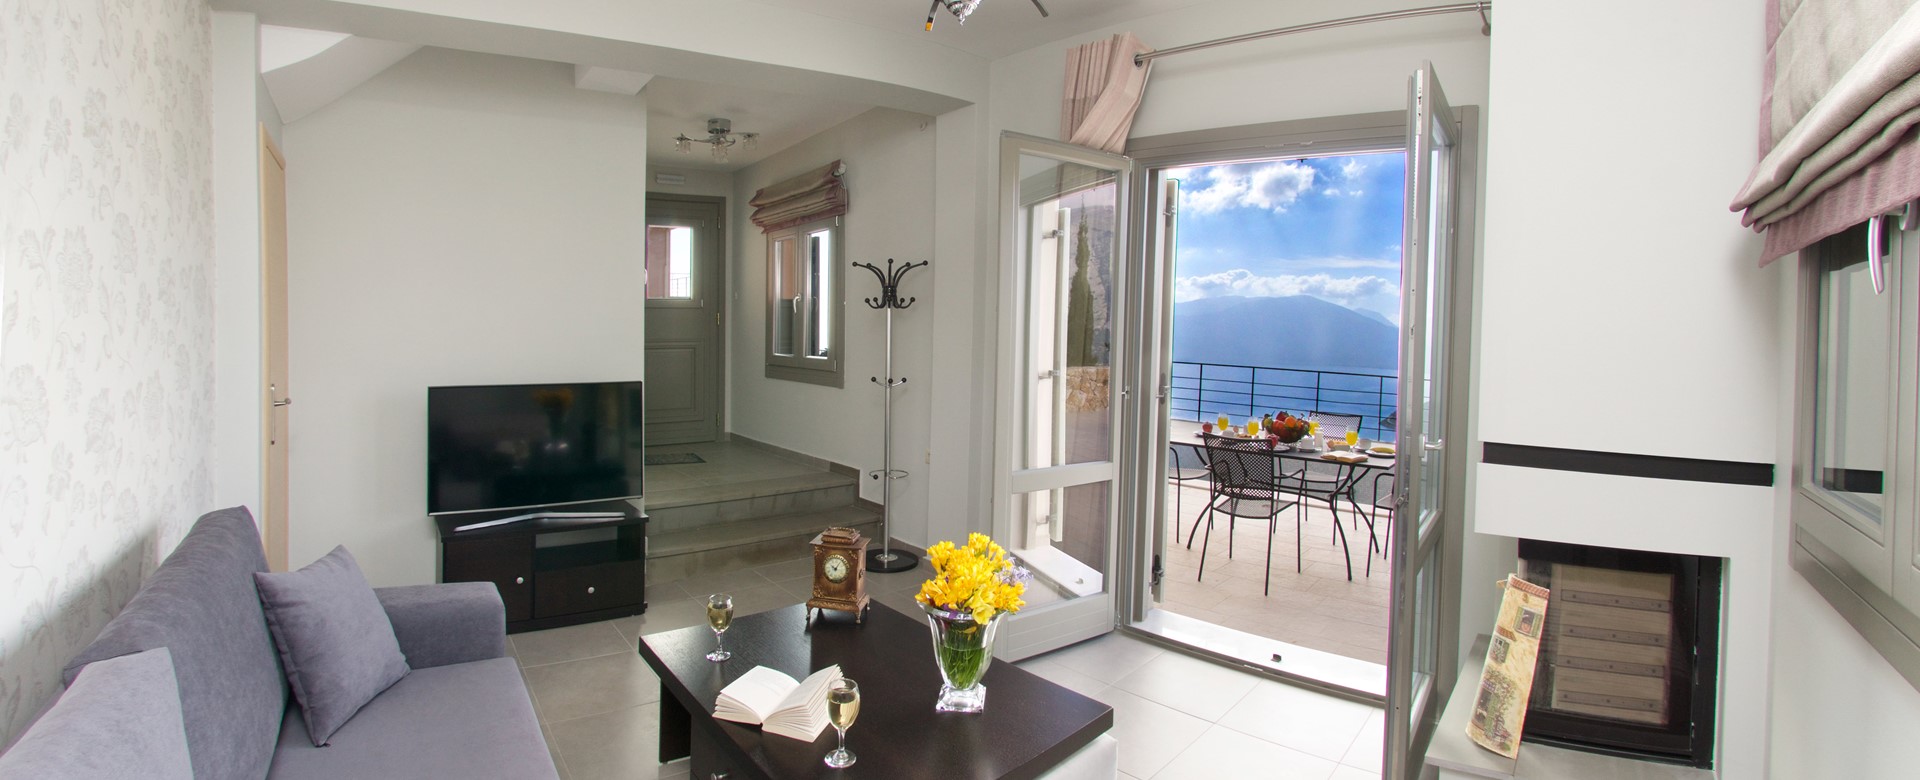 Comfortable but cozy lounge space inside Villa Aurora, Agia Efimia, Kefalonia, Greek Islands